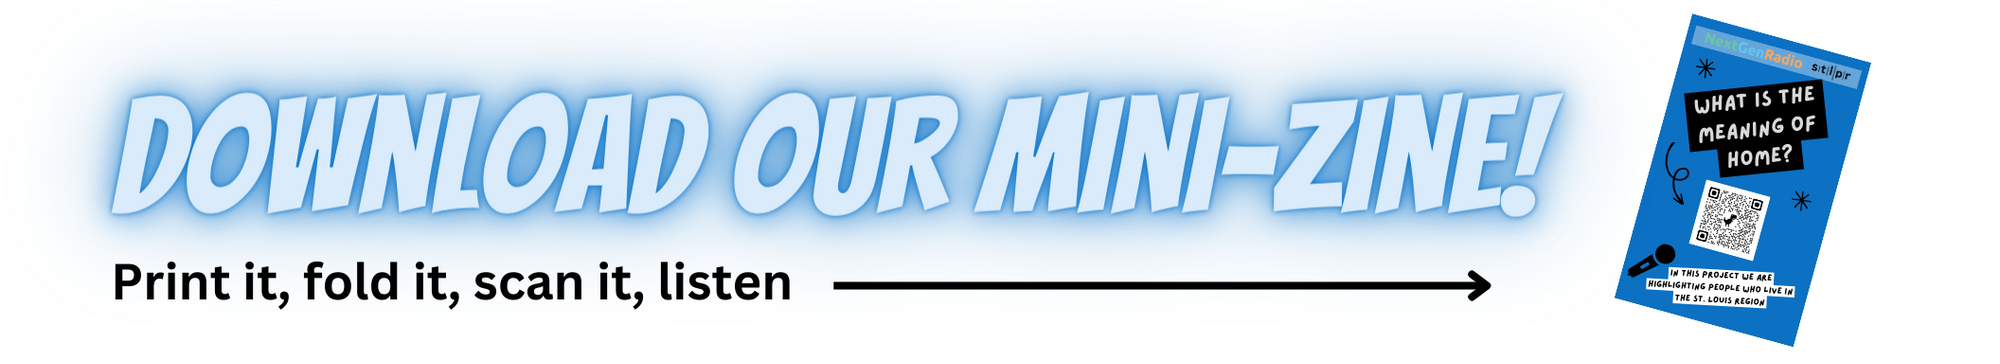 Download our mini zine